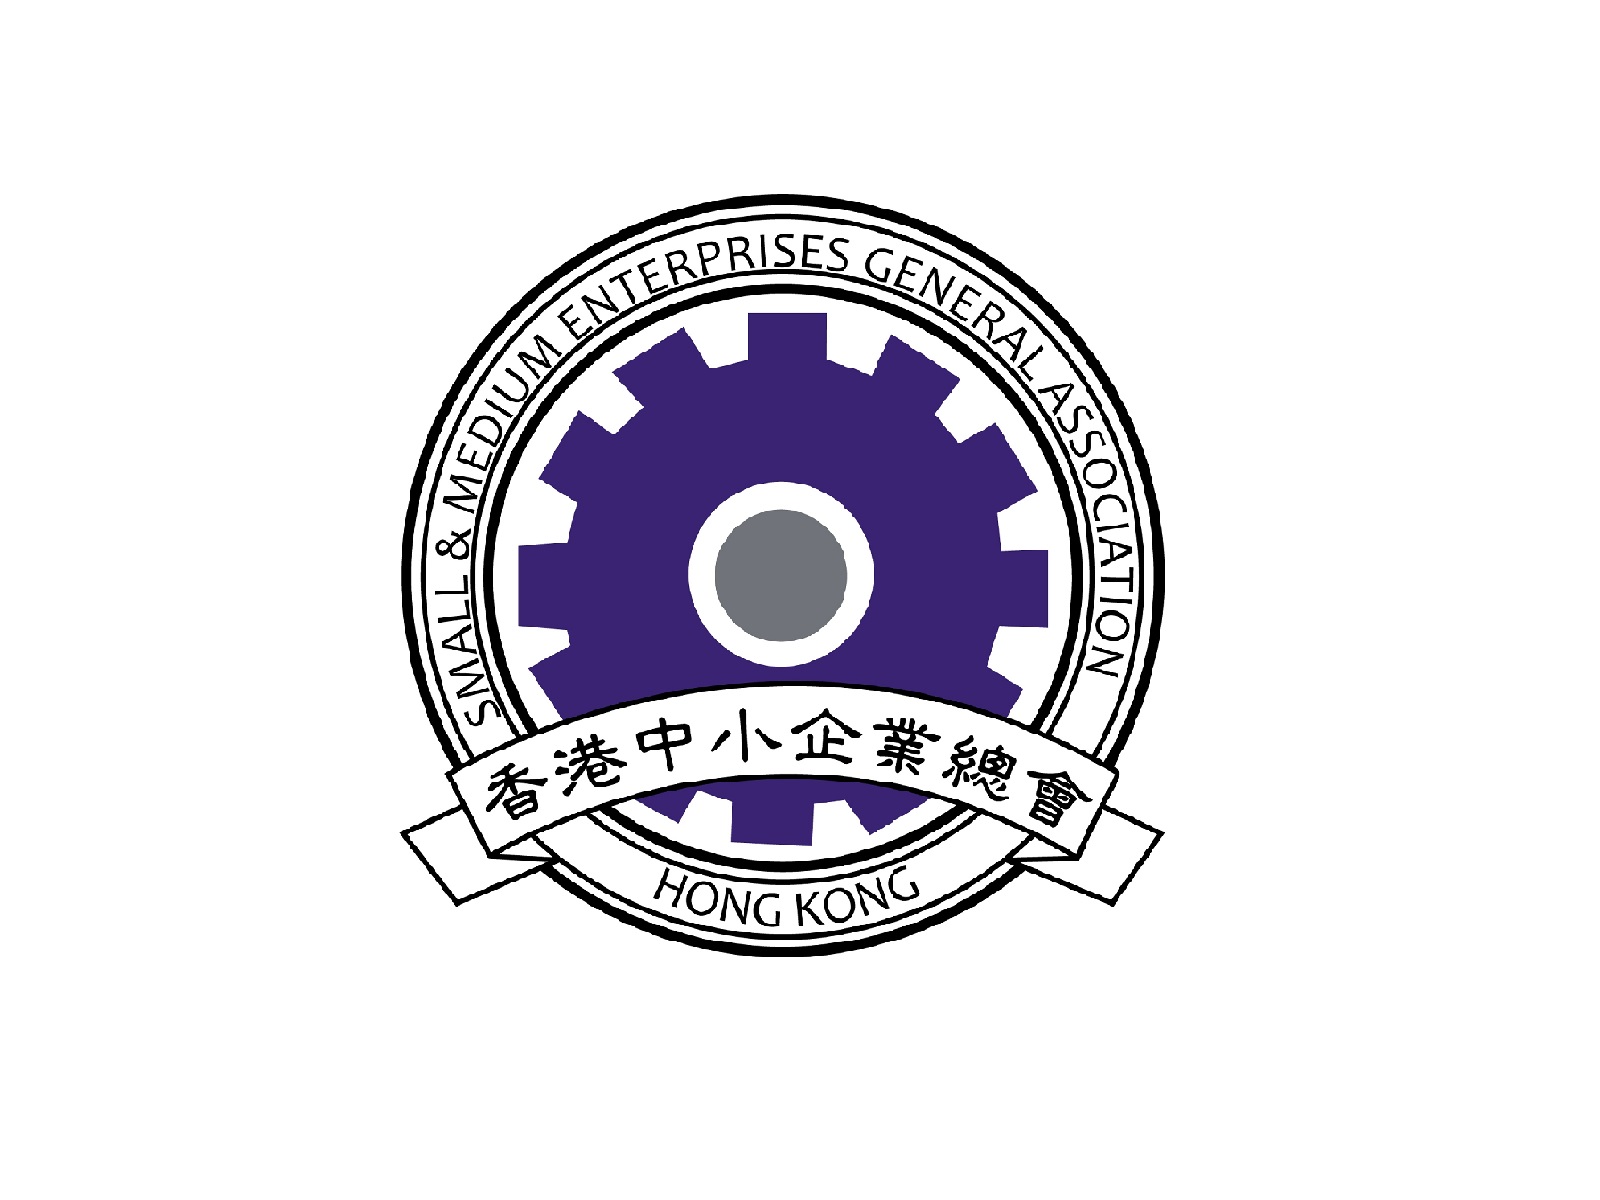 Hong Kong Small & Medium Enterprises General Association